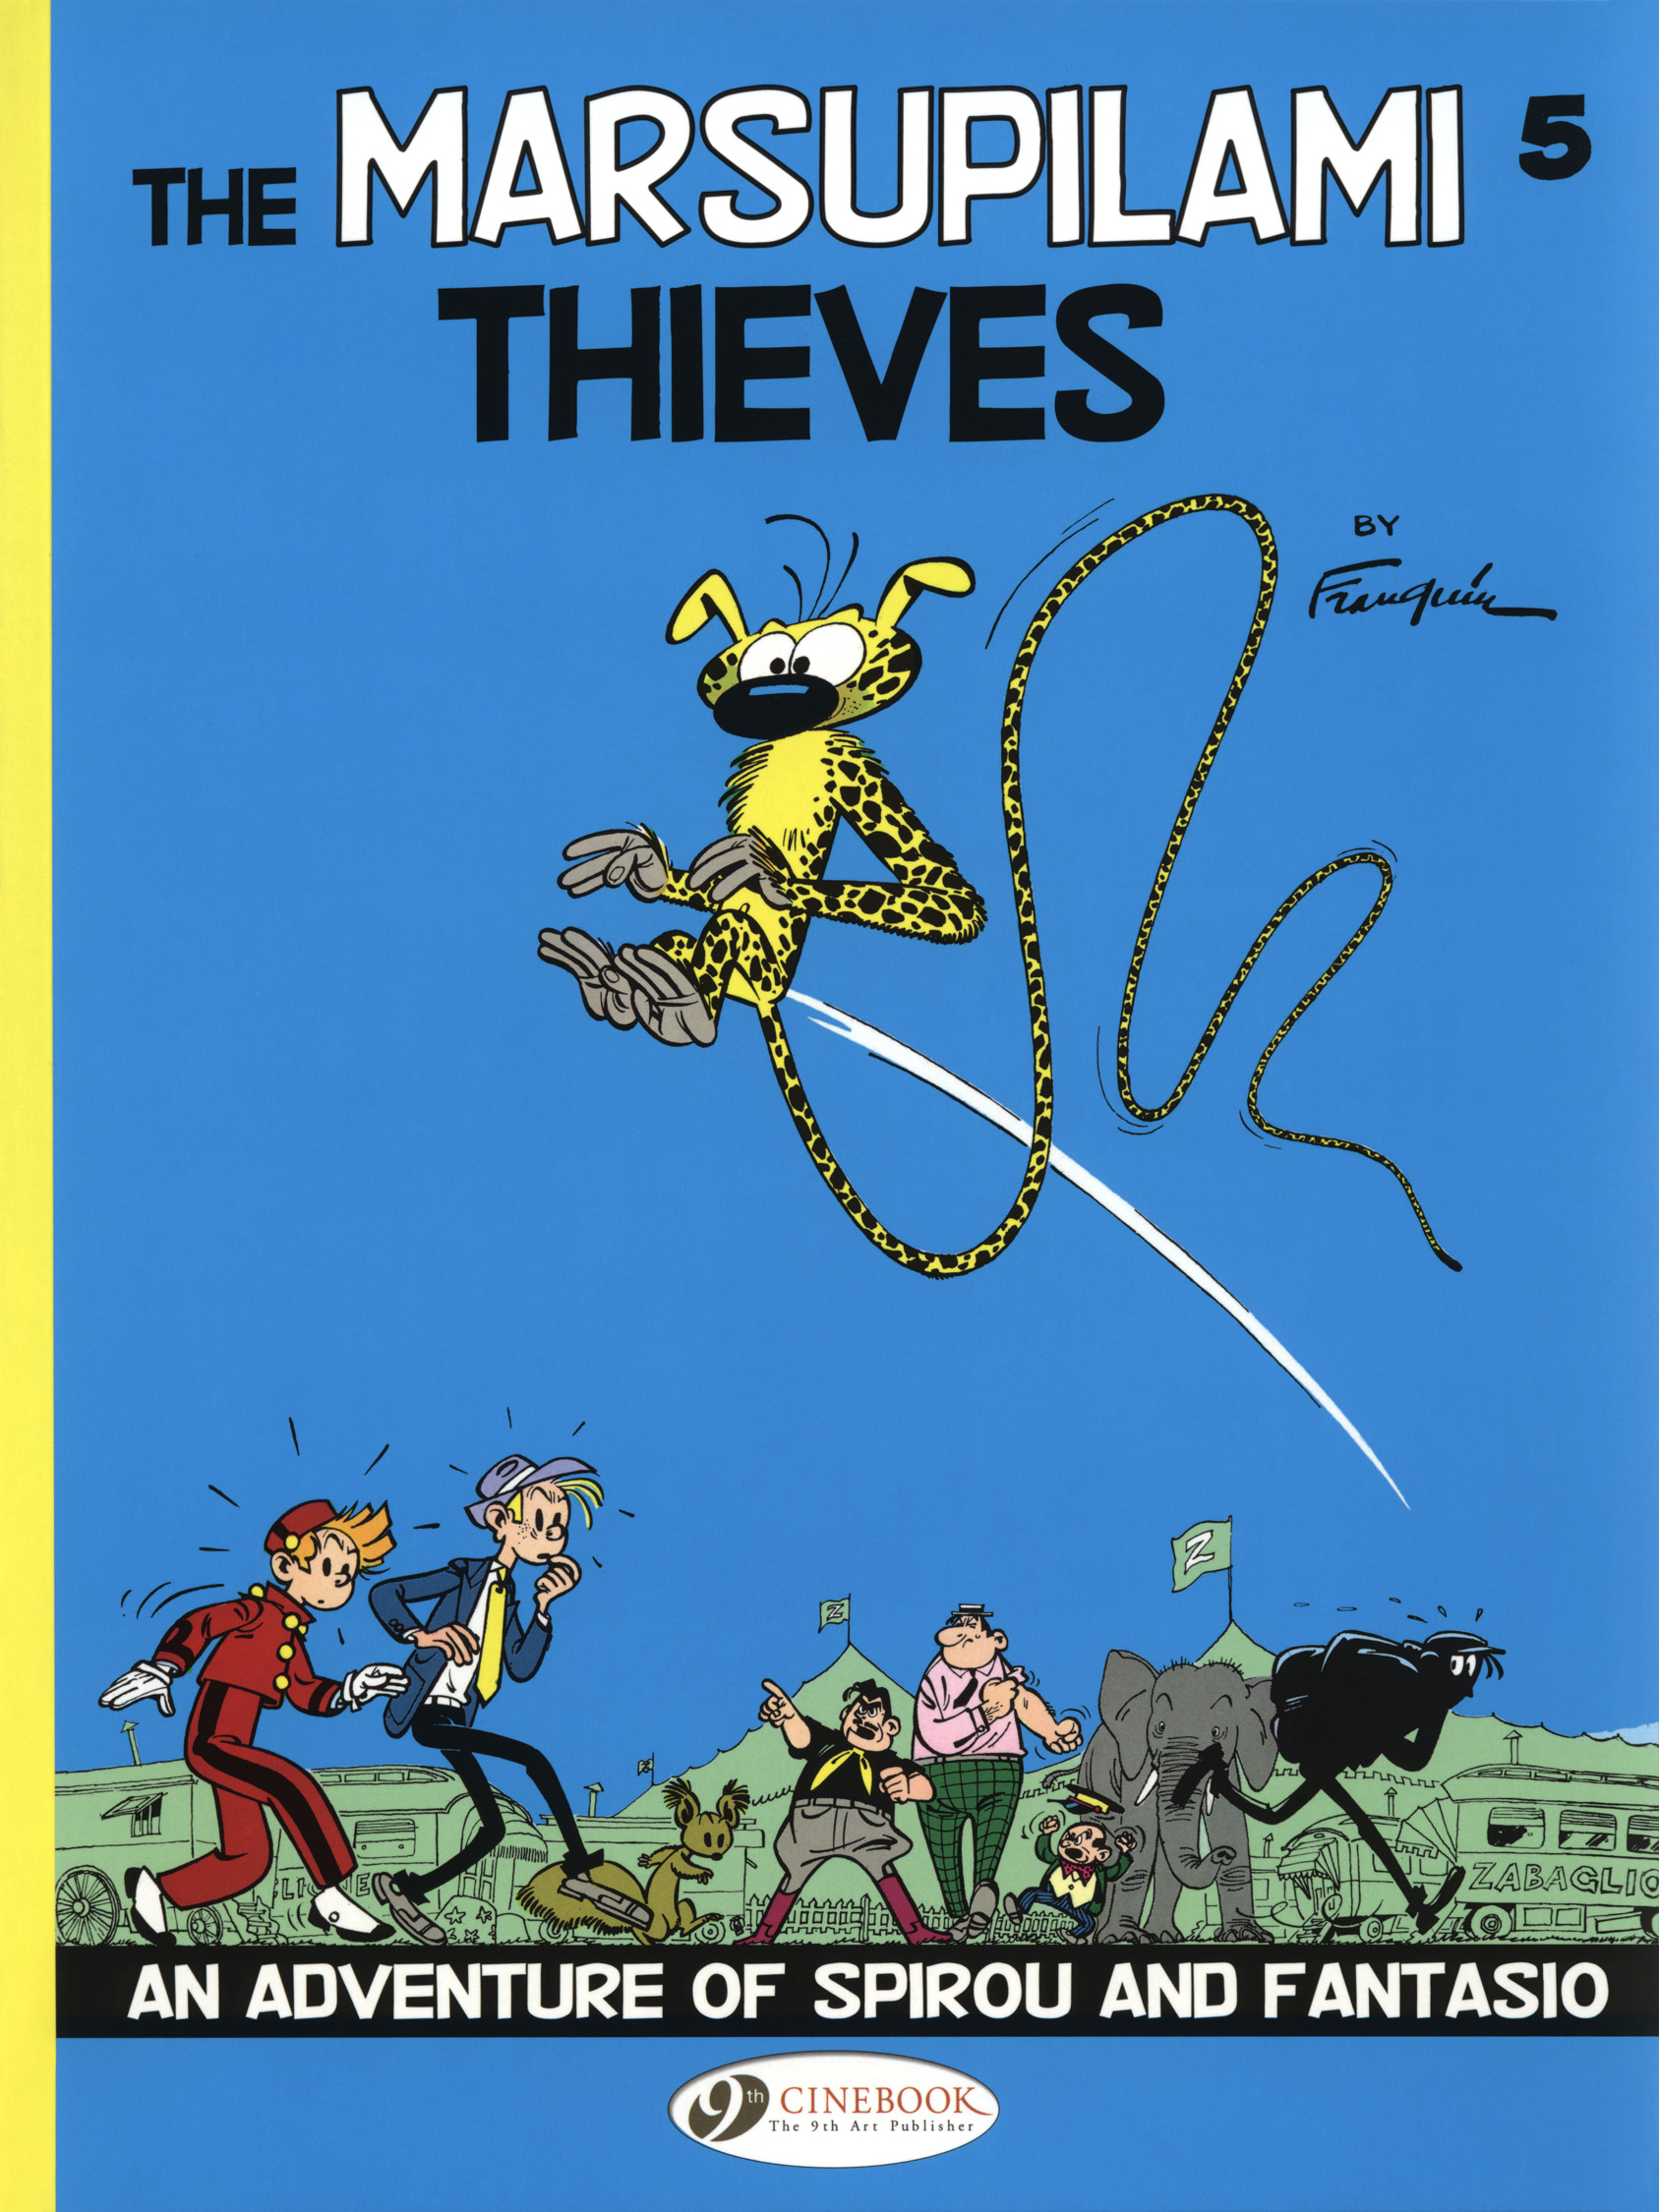 Review: The Marsupilami Thieves